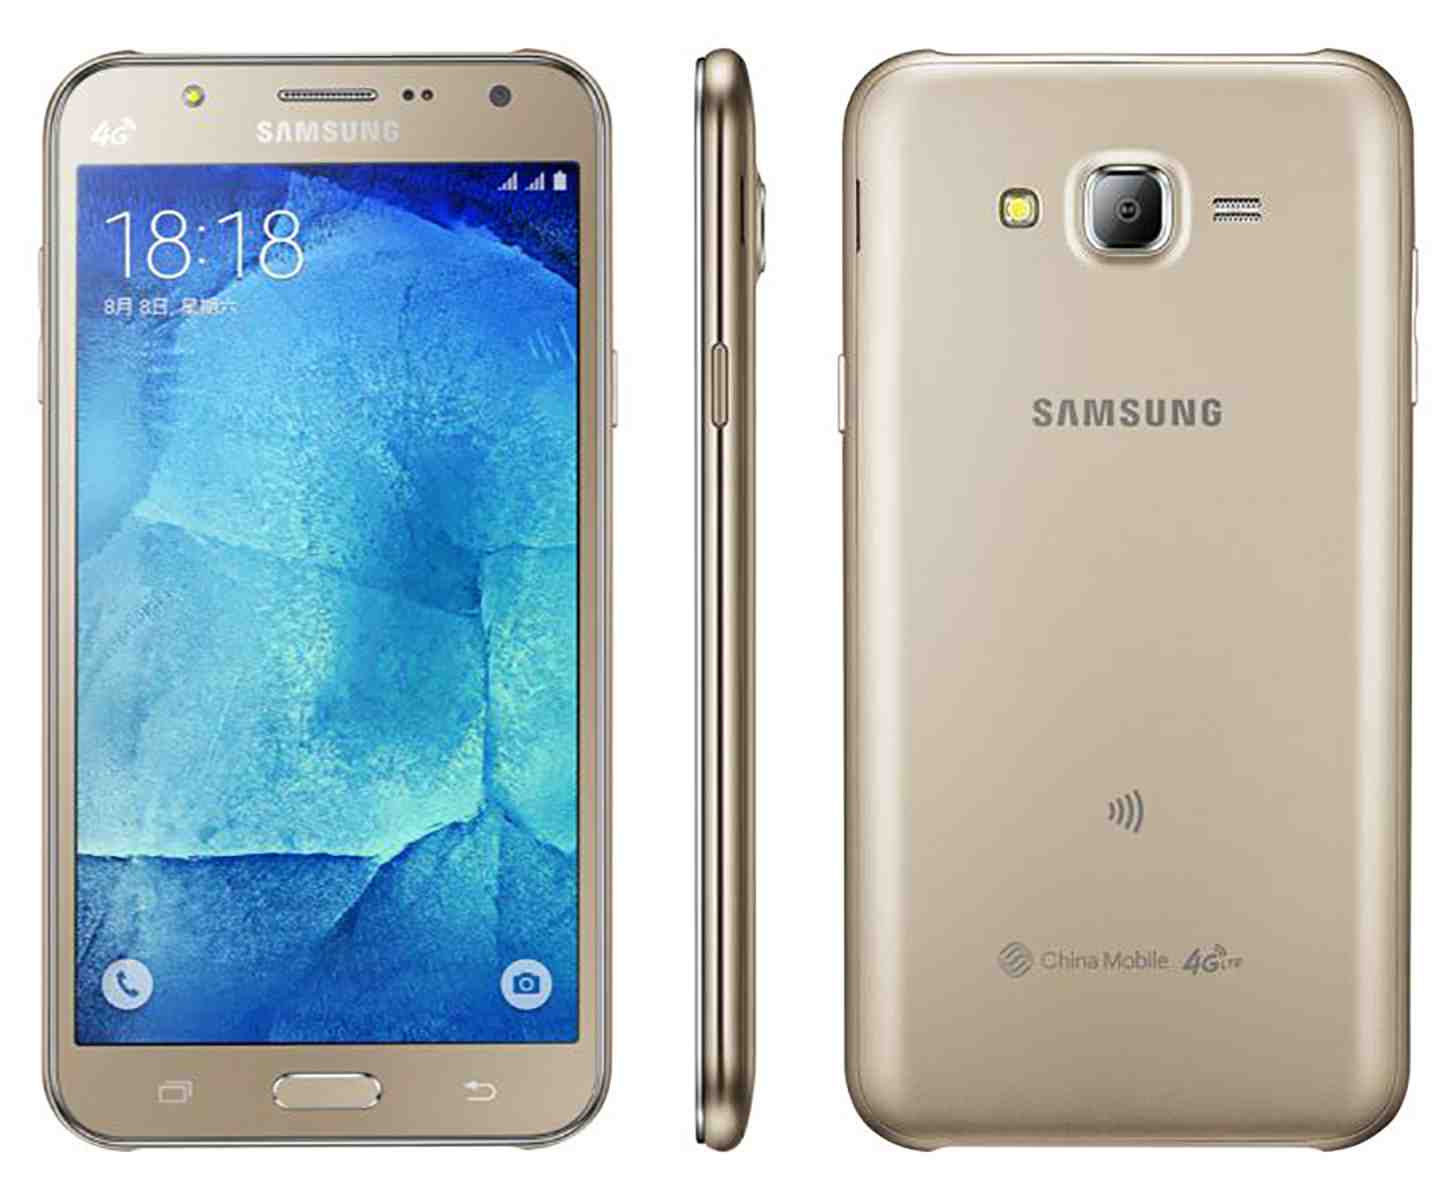 Samsung Galaxy J7 review